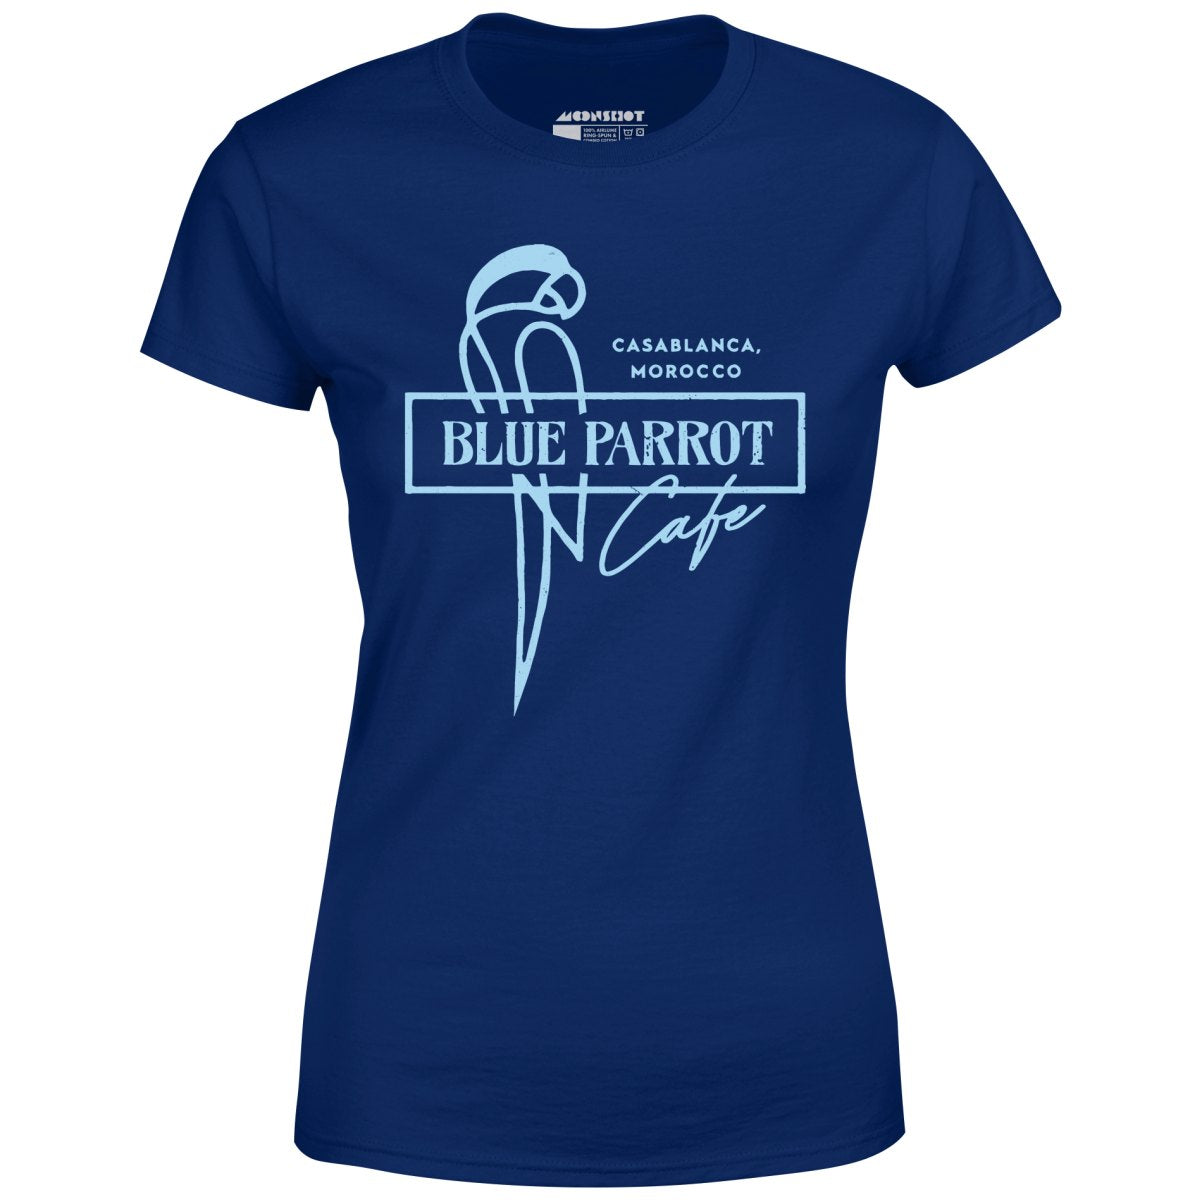 Casablanca - Blue Parrot Cafe - Women's T-Shirt